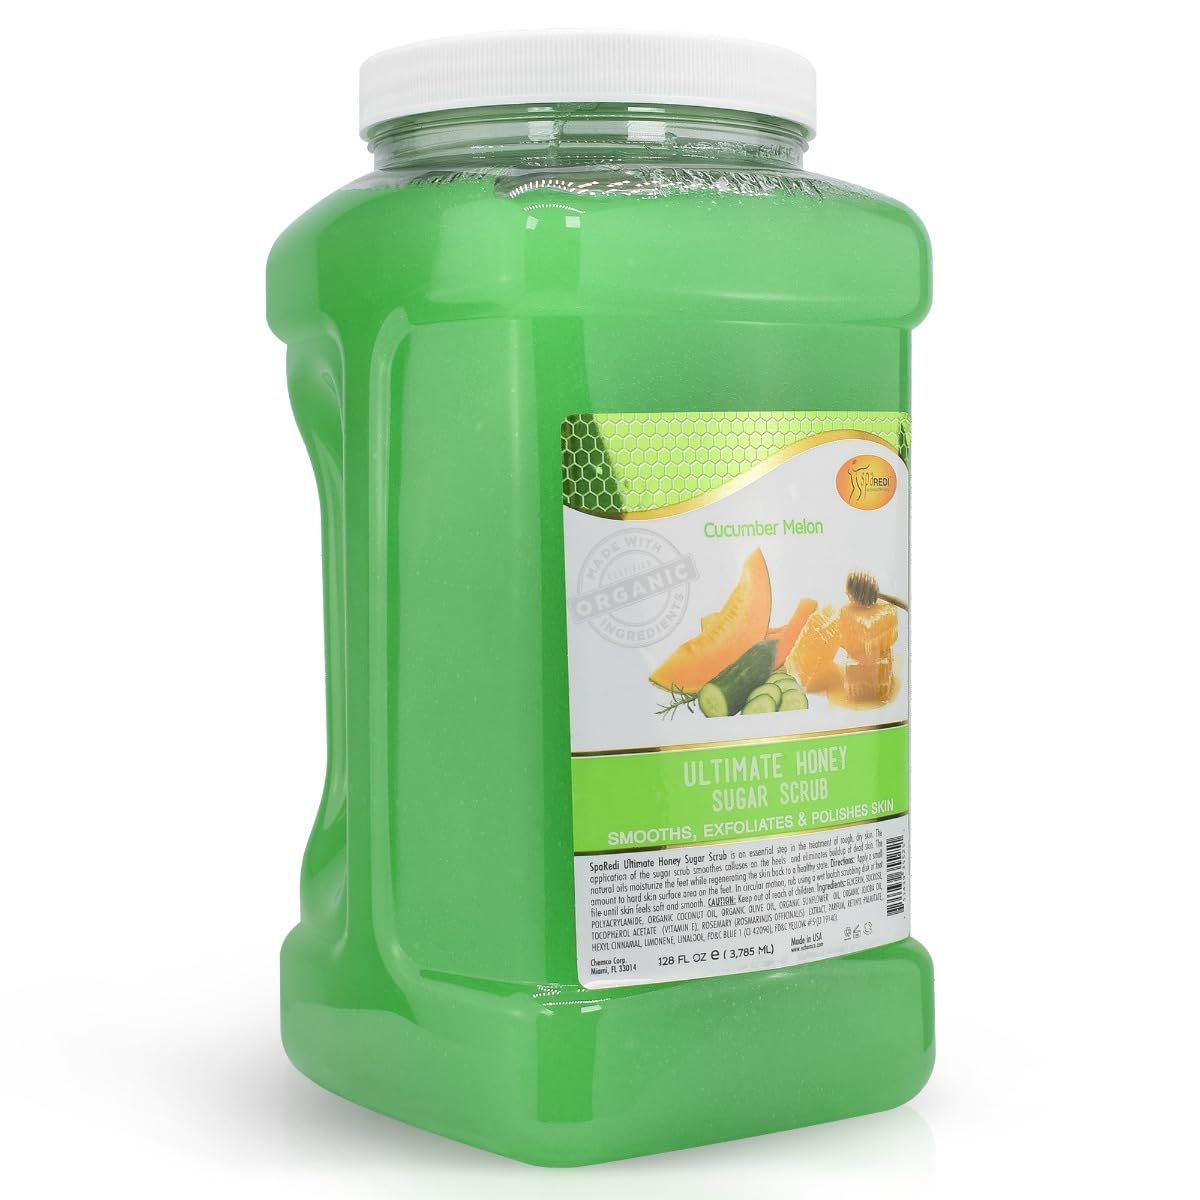 SPA REDI - Sugar Body Scrub, Honey, Cucumber Melon, 128 Oz, Exfoliating, Moisturizing, Hydrating and Nourishing, Glow, Polish, Smooth and Fresh Skin - Body Exfoliator